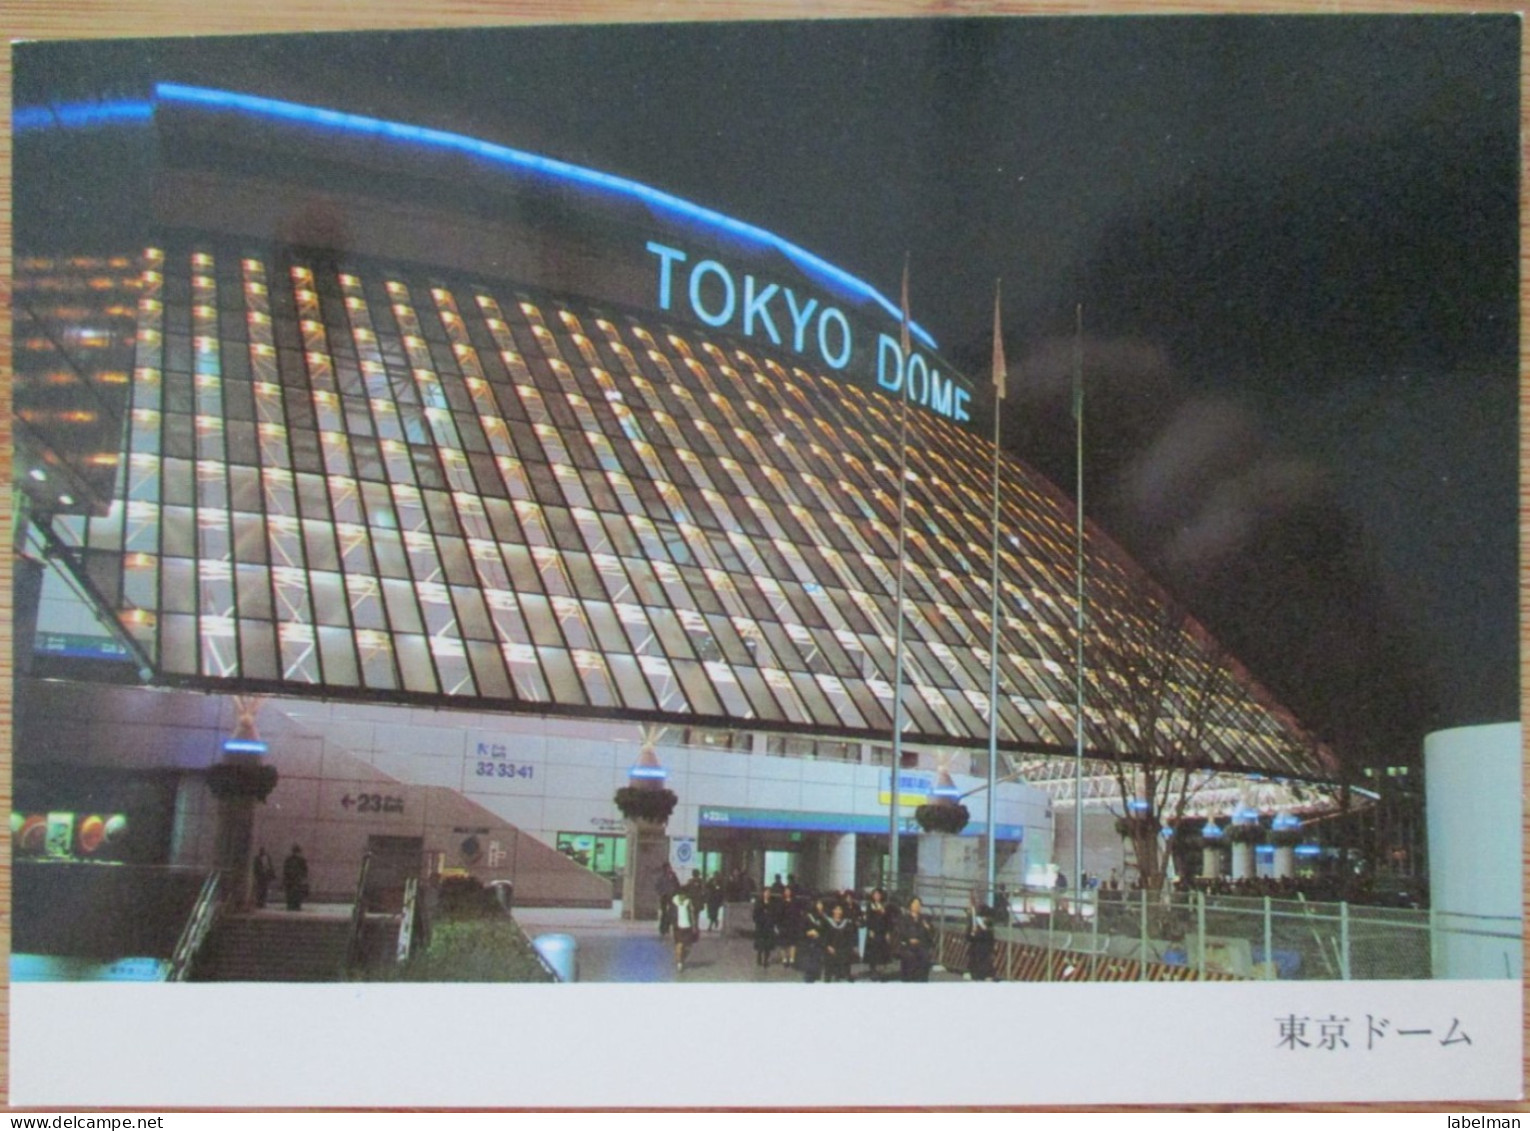 JAPAN TOKYO DOME SPORTS STADIUM POSTCARD ANSICHTSKARTE PICTURE CARTOLINA PHOTO CARD POSTKARTE CARTE POSTALE KARTE - Tokyo